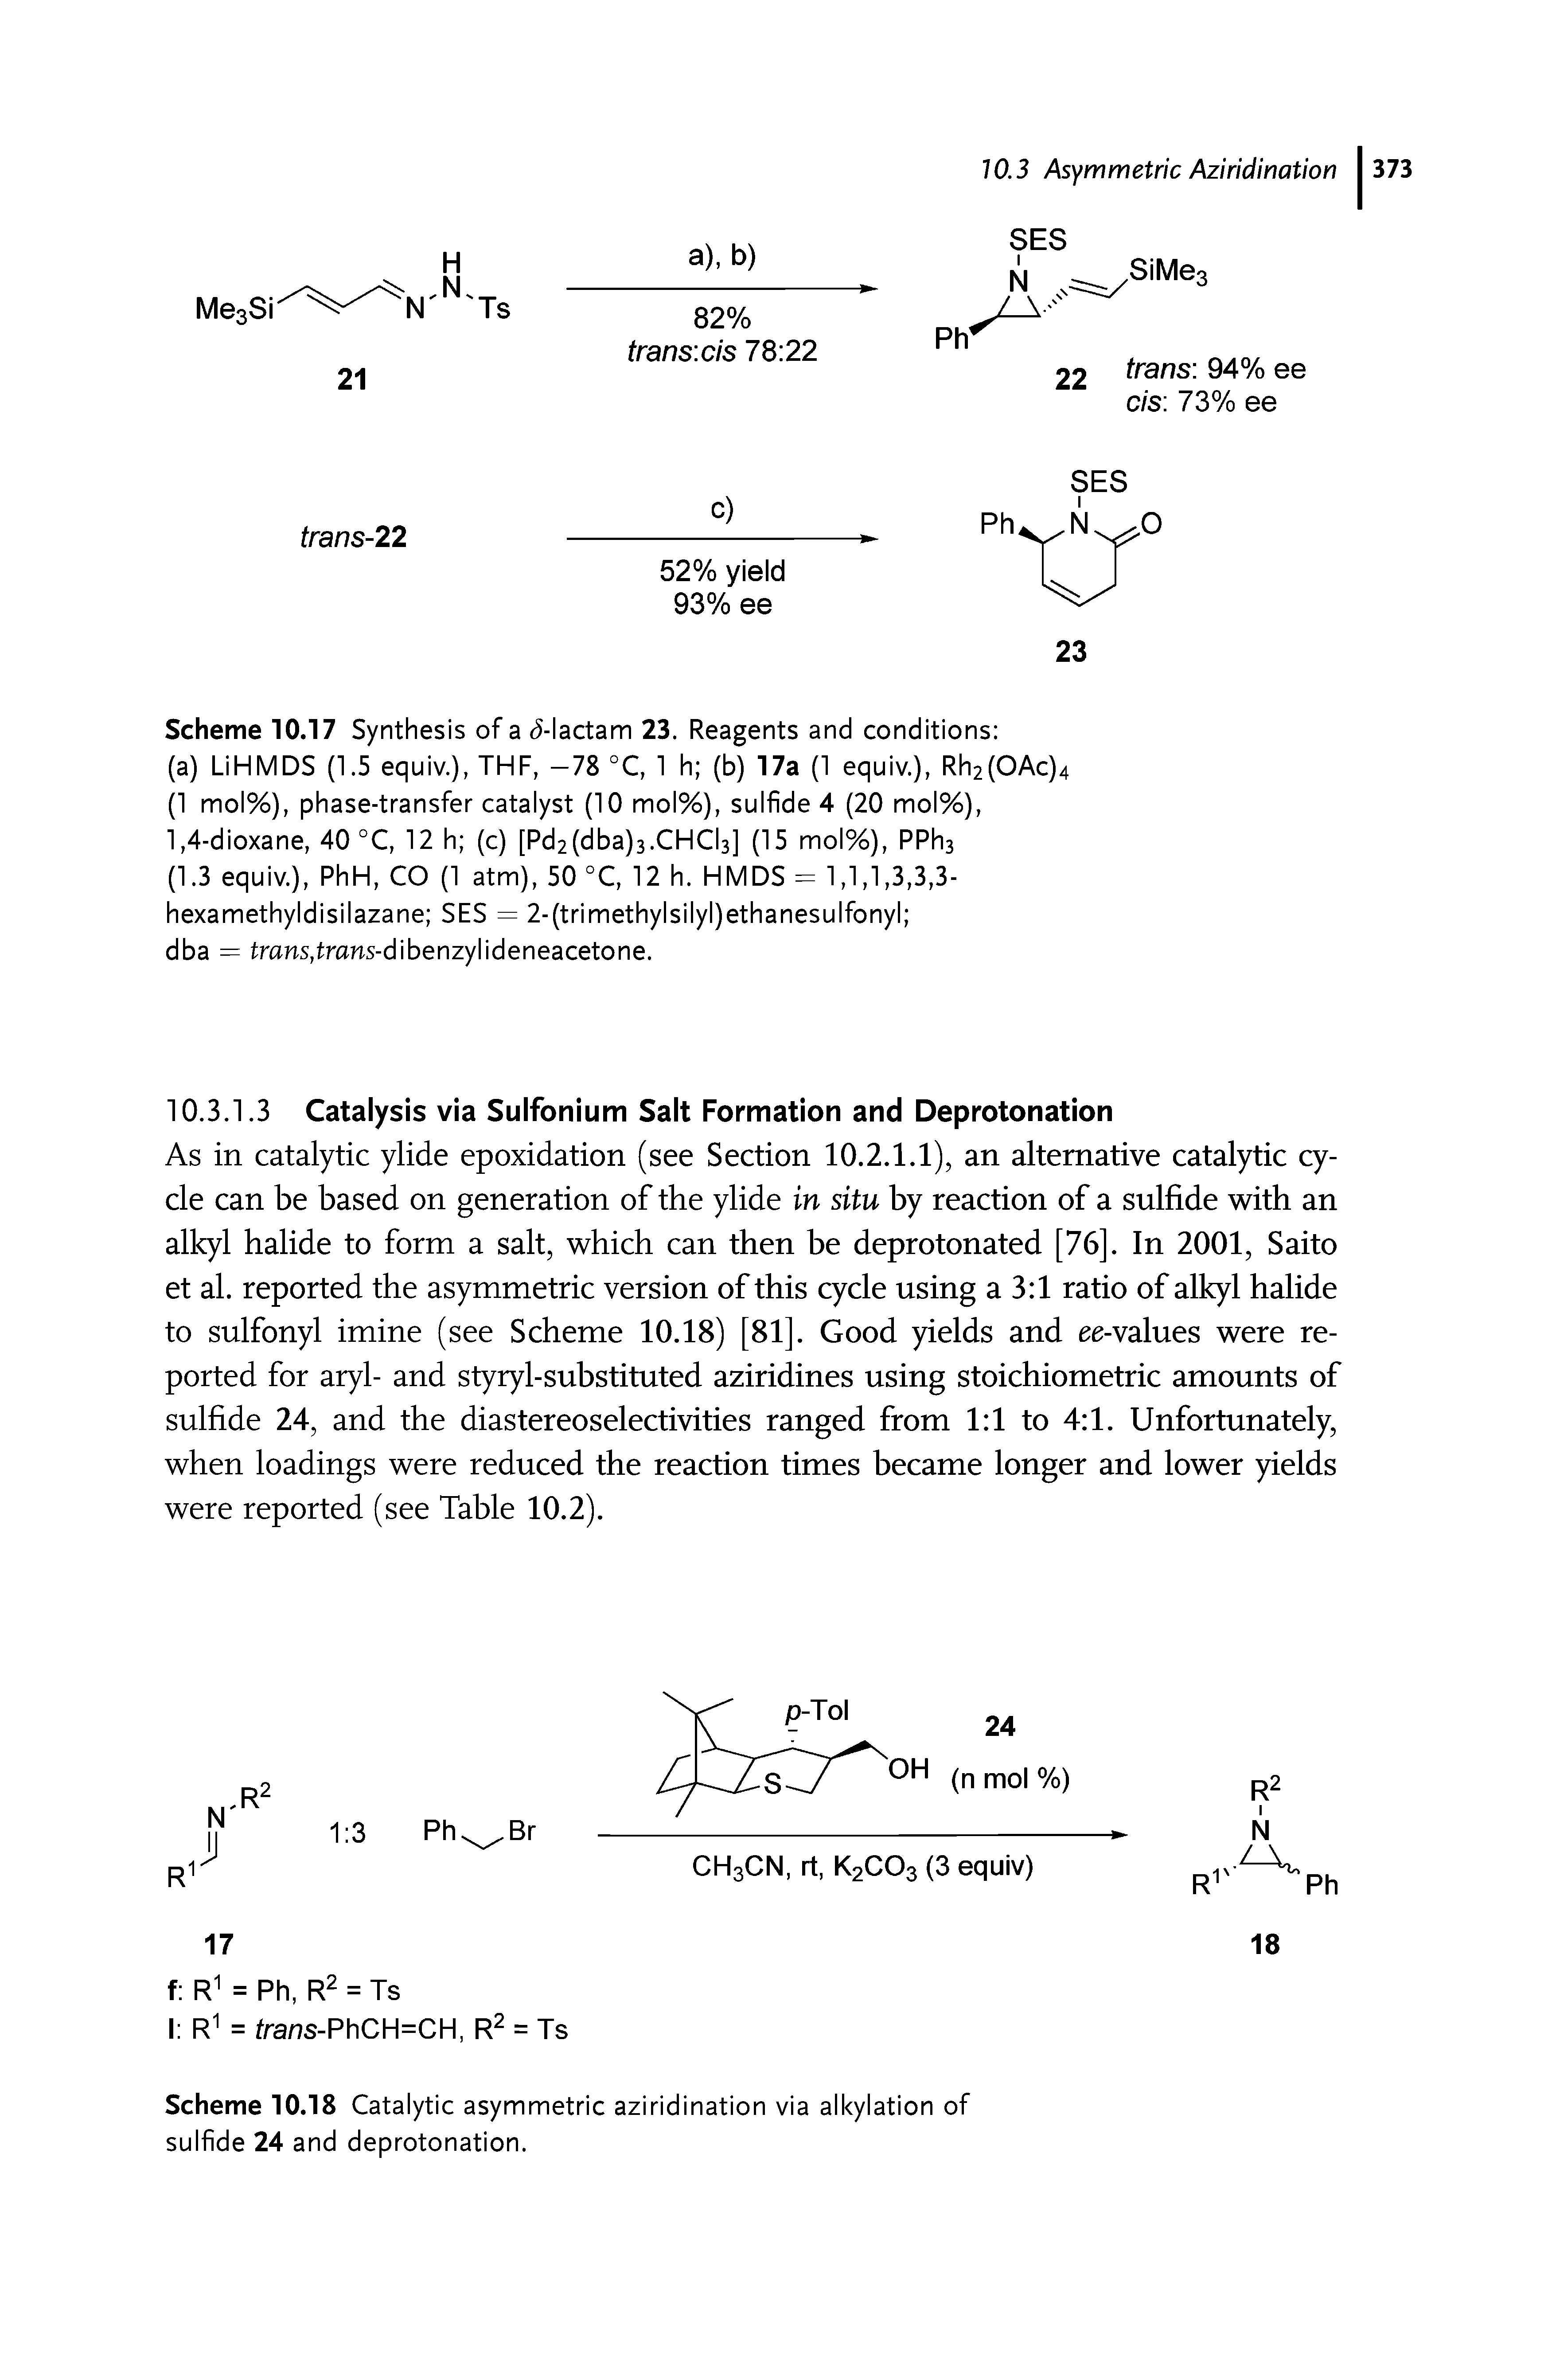 Scheme 10.18 Catalytic asymmetric aziridination via alkylation of sulfide 24 and deprotonation.